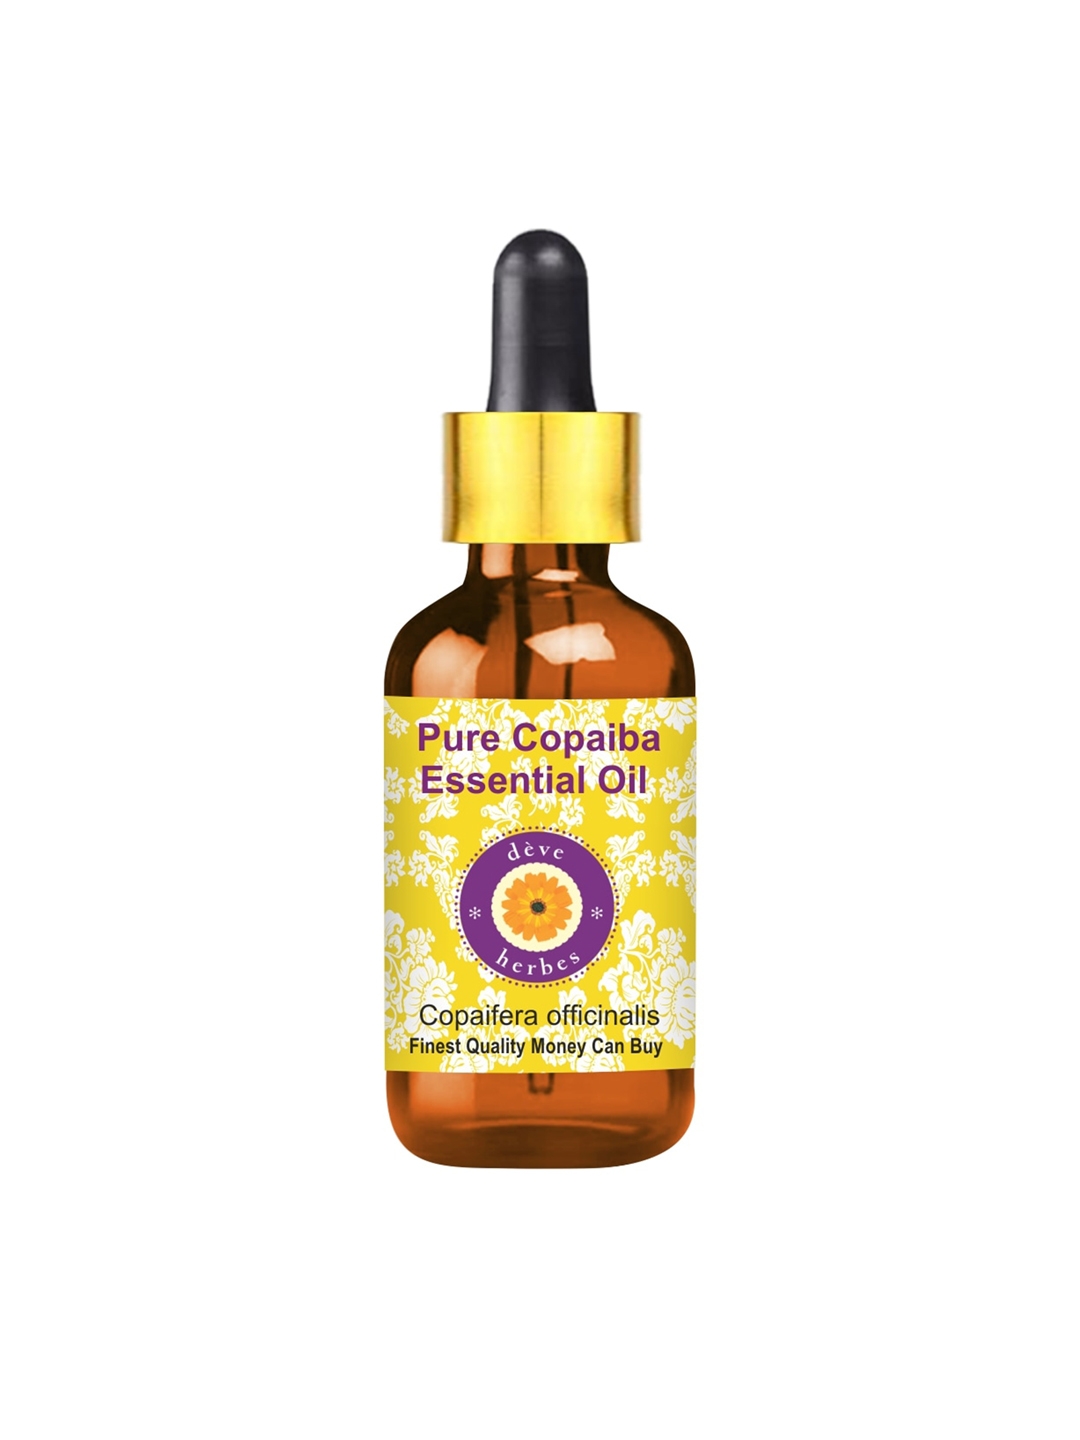 Deve Herbes Pure Copaiba Essential Oil 100% Natural Therapeutic Grade 100ml